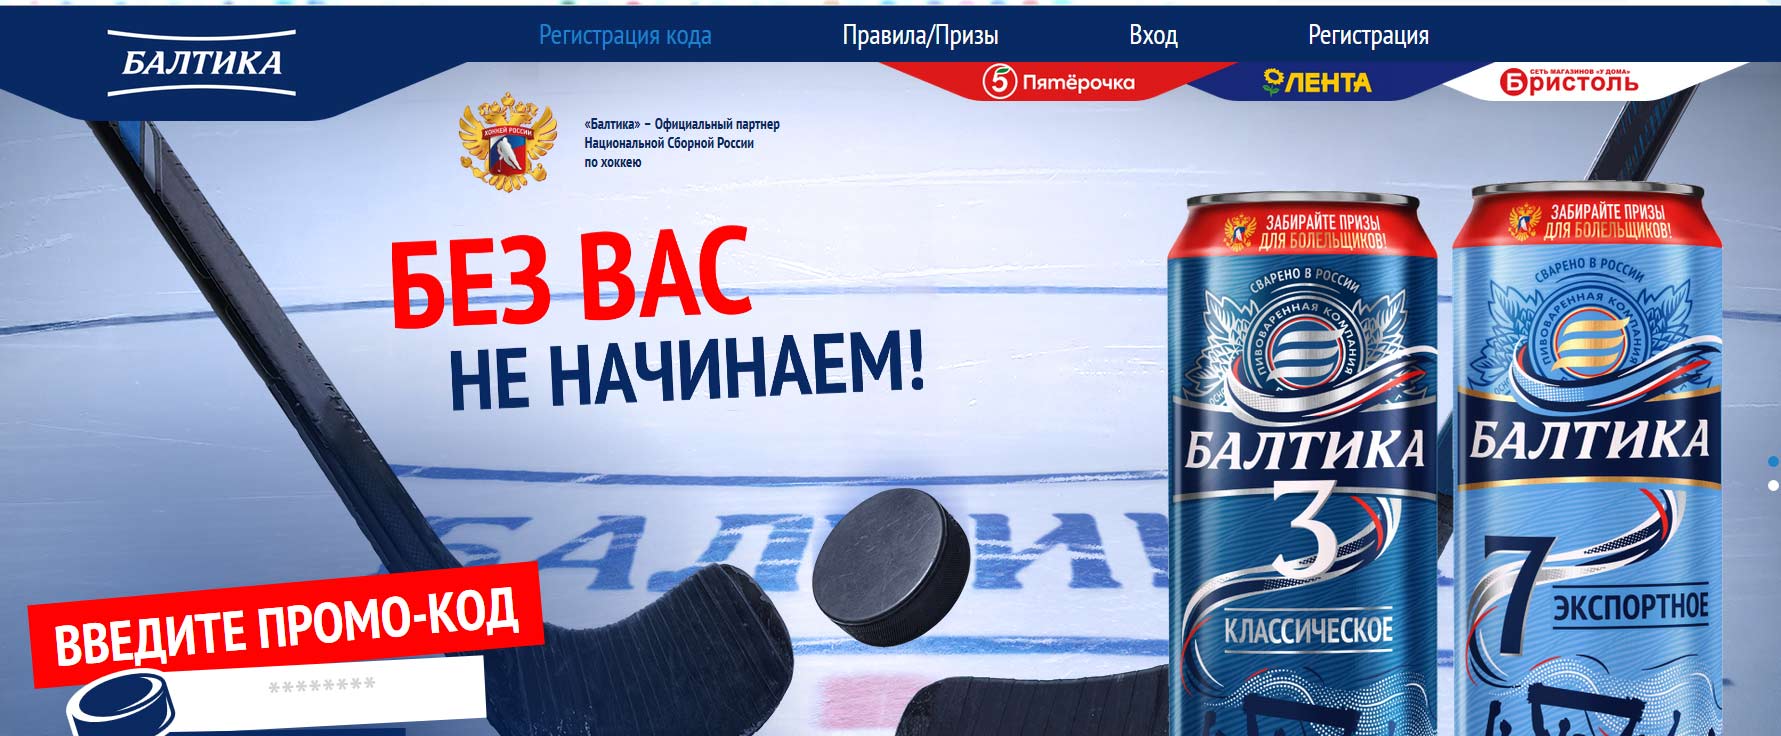 baltikapromo.ru как зарегистрироваться 